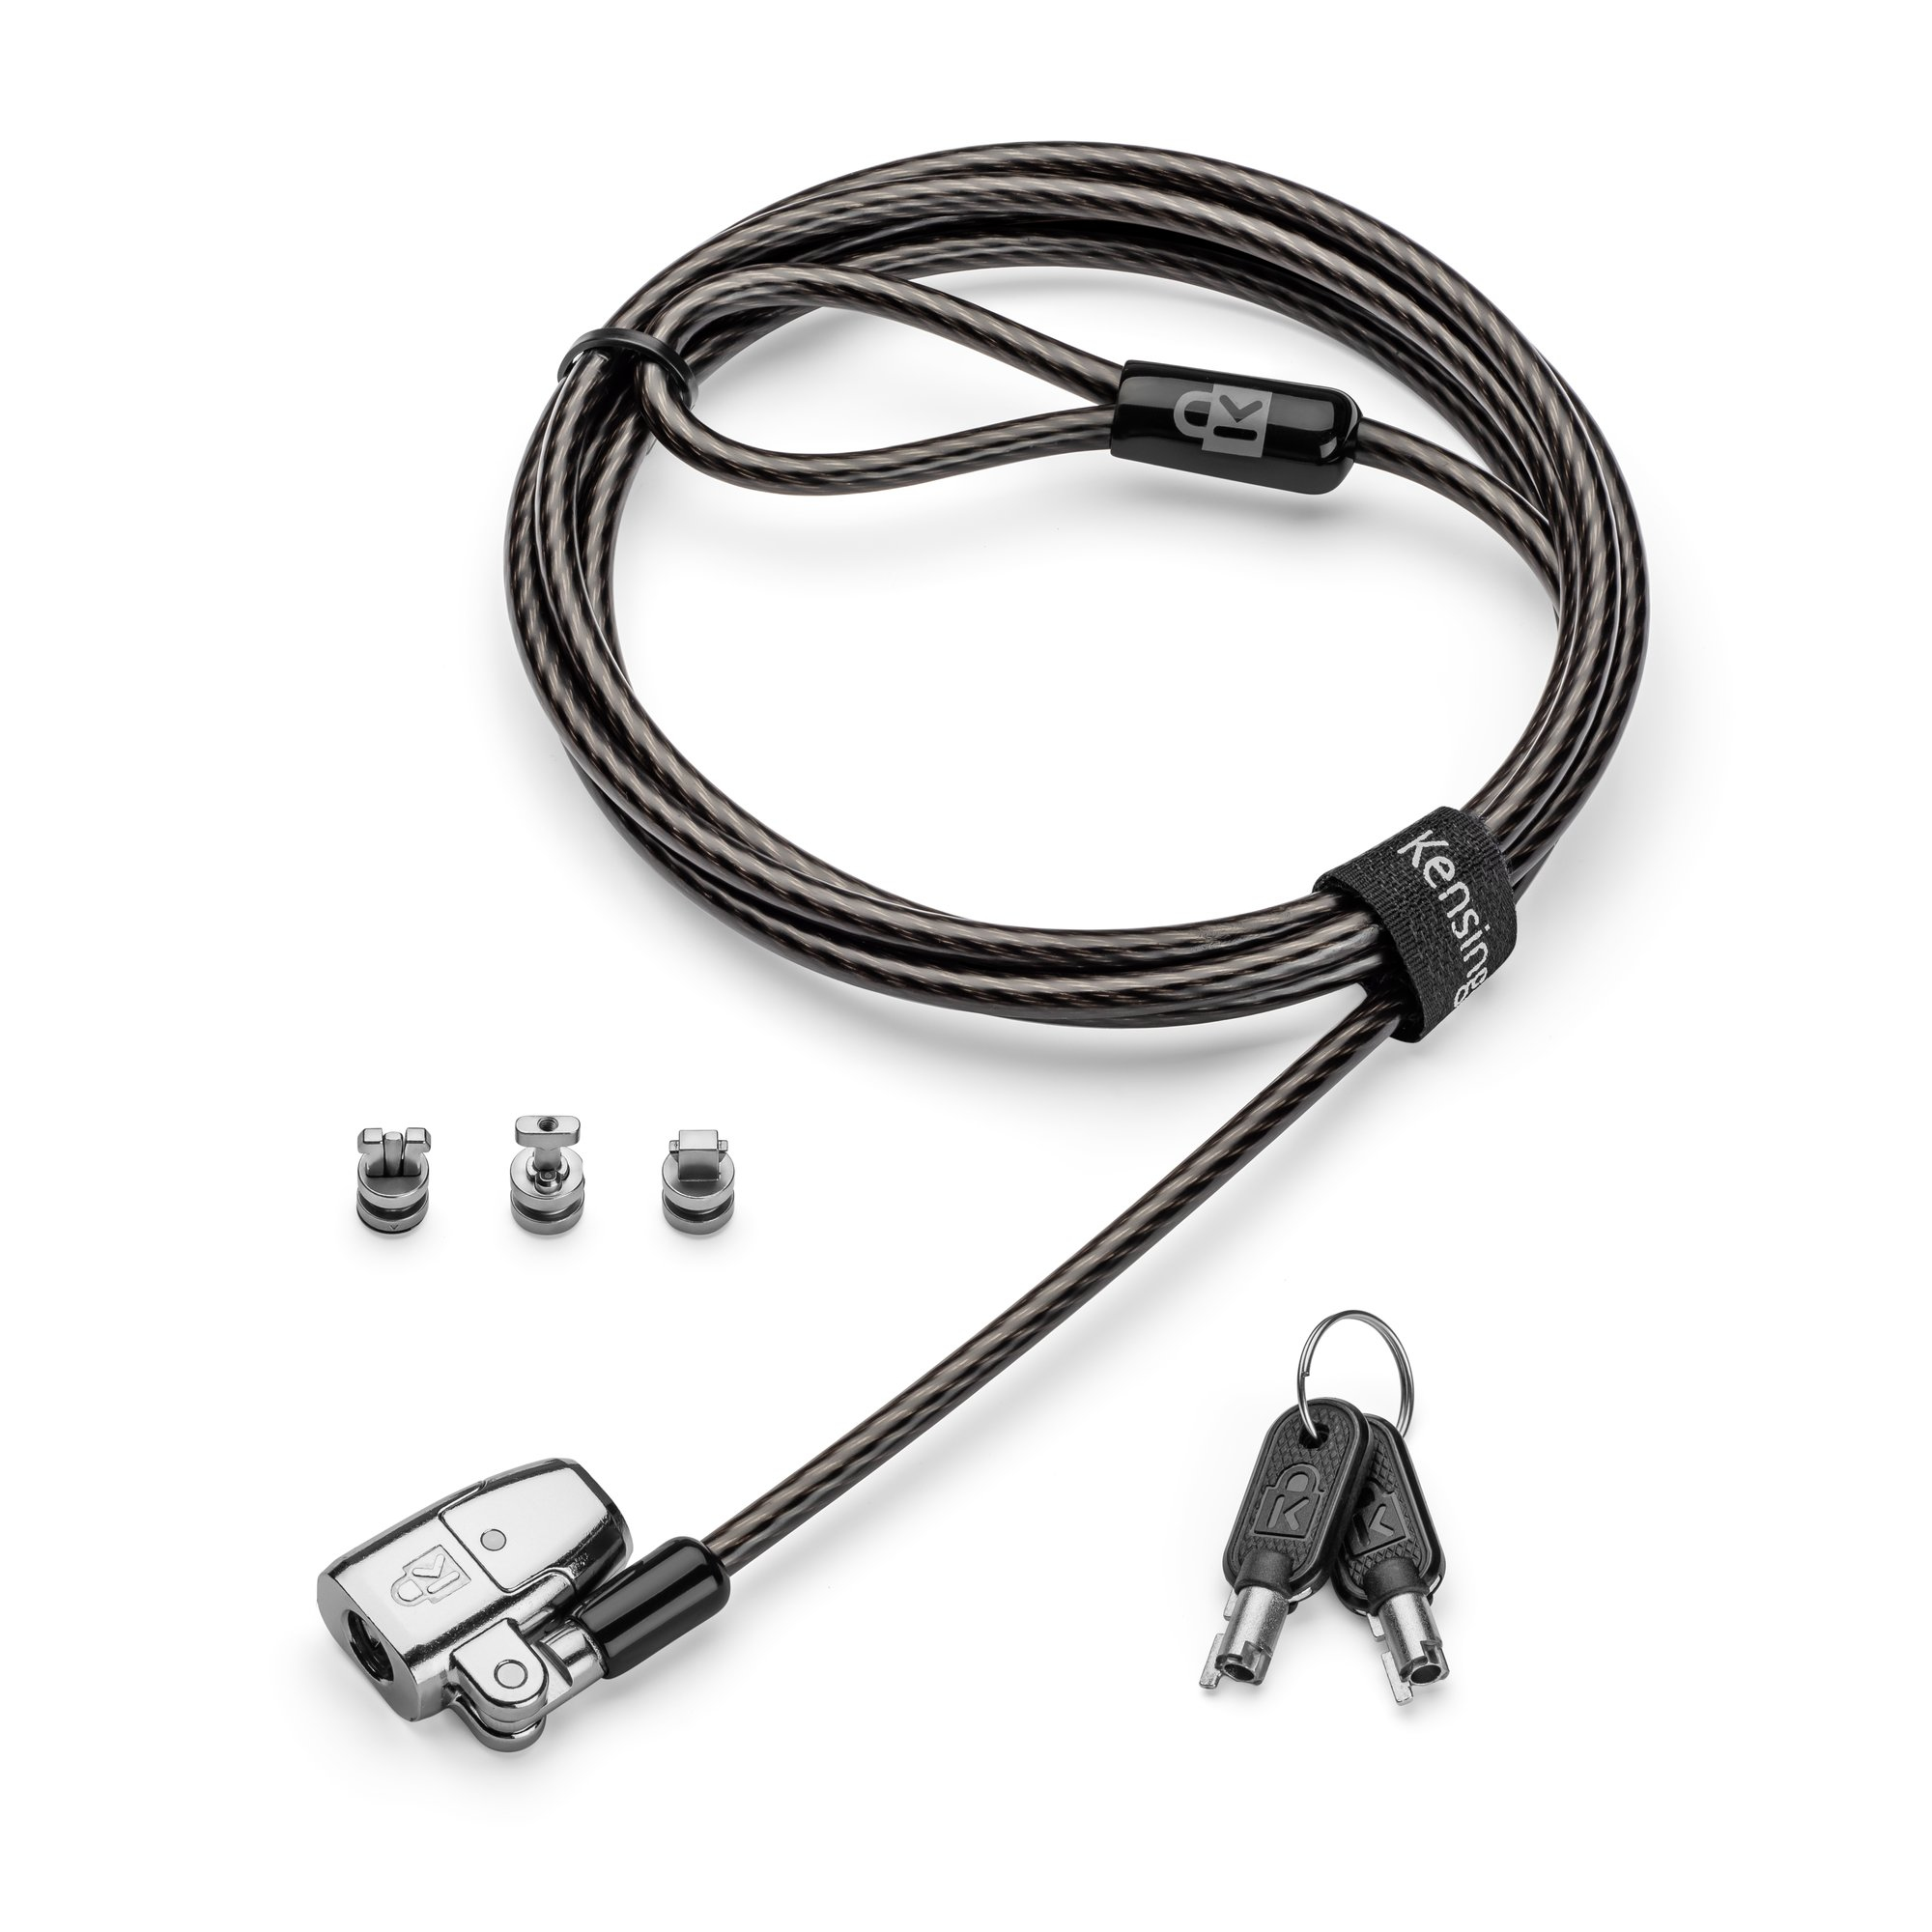 Photos - Cable (video, audio, USB) Kensington ClickSafe 2.0 3-in-1 Keyed Laptop Lock (T-Bar, Nano & W K68 